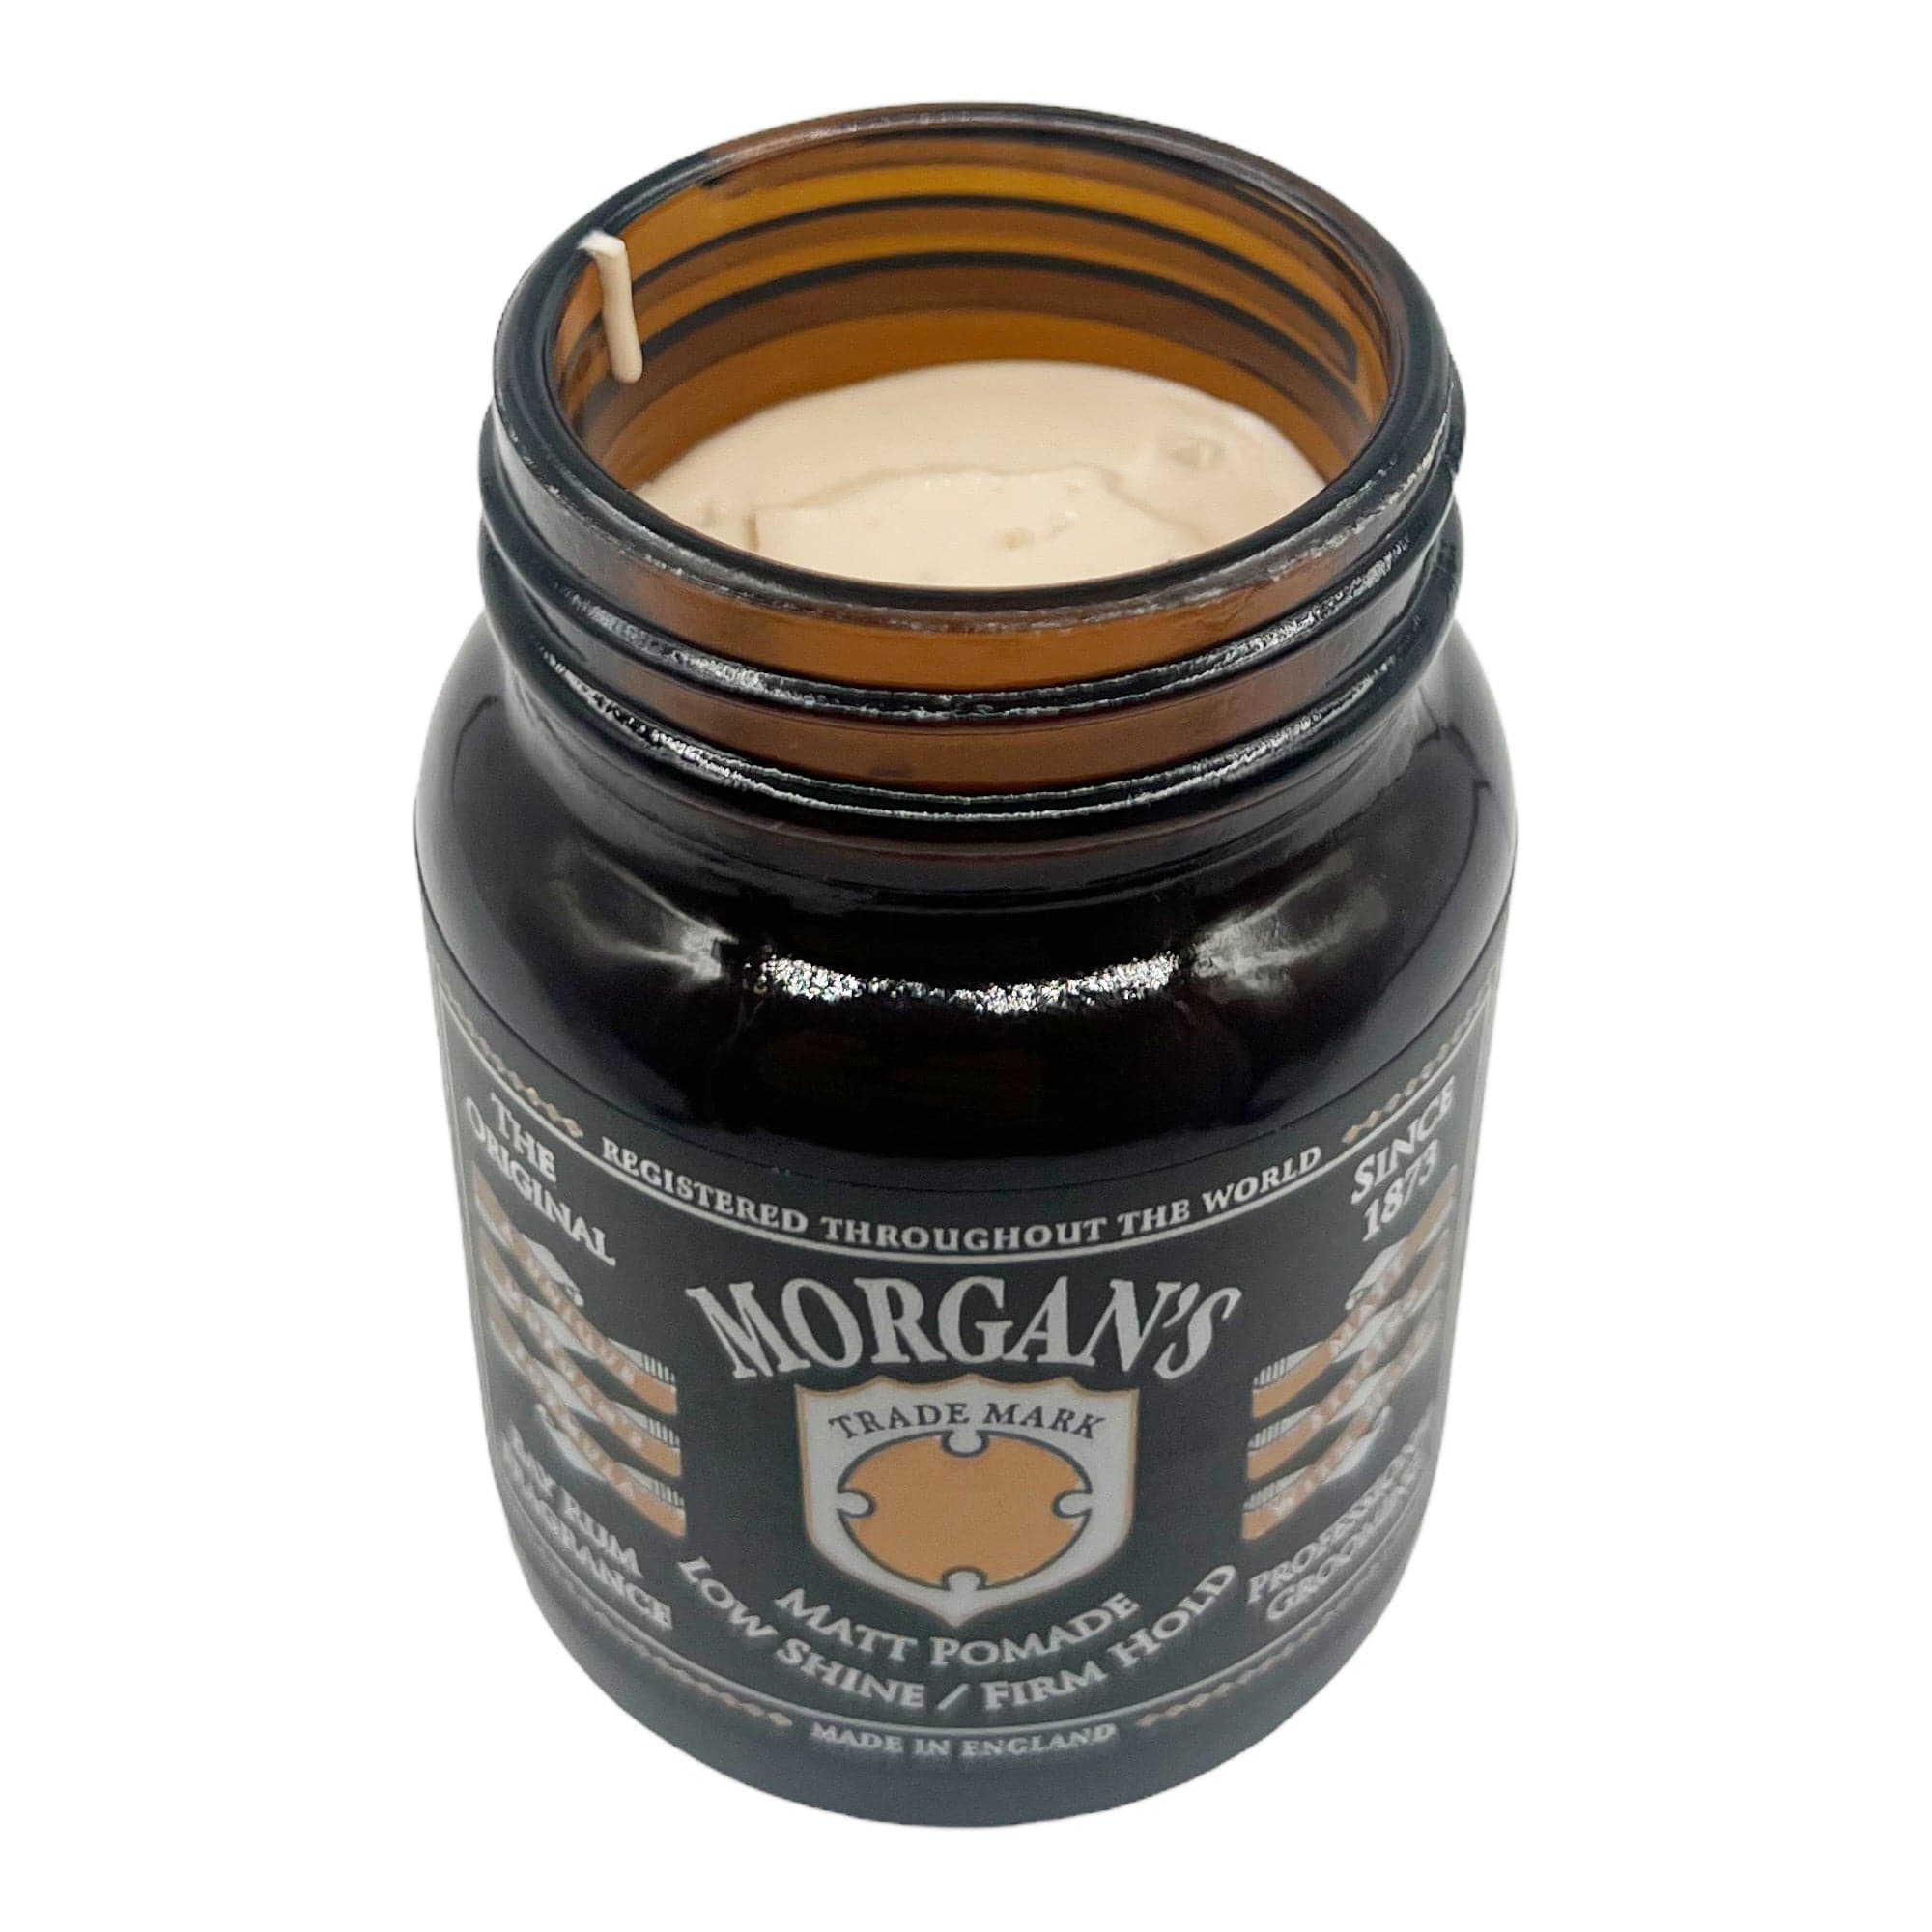 Morgan's - Matt Pomade Low Shine Firm Hold Bay Rum Fragrance 100g